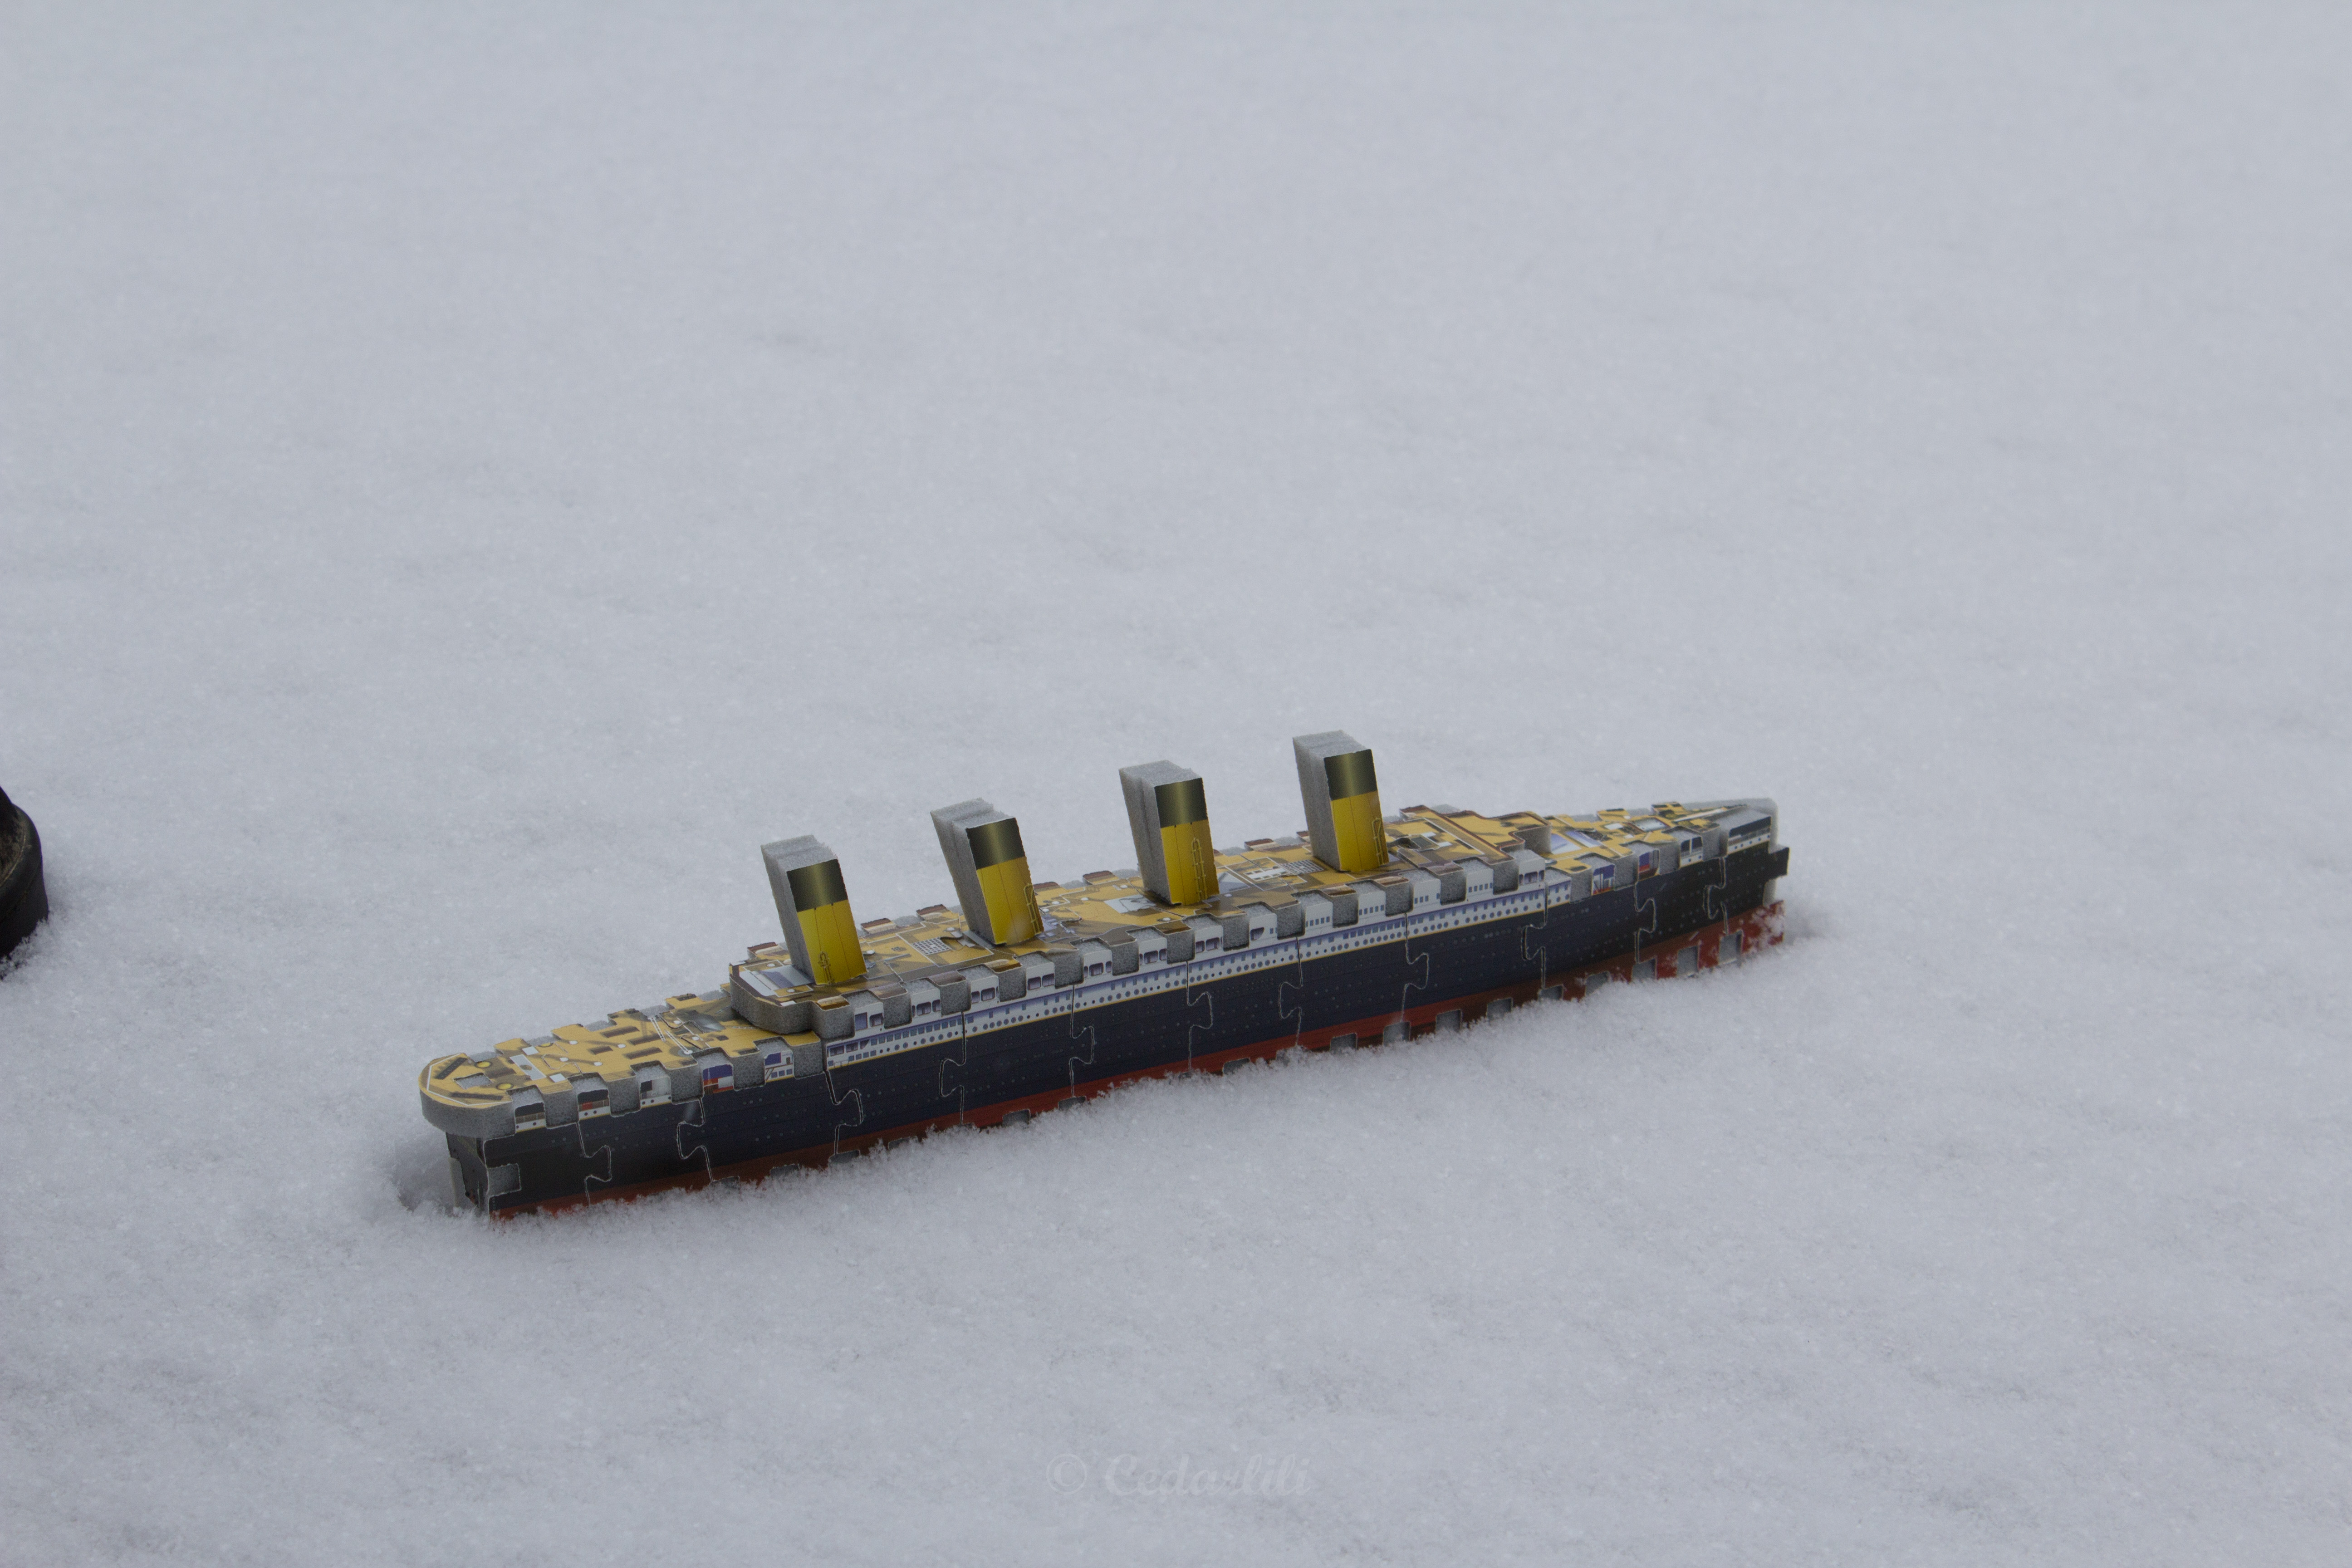 The Titanic in snow